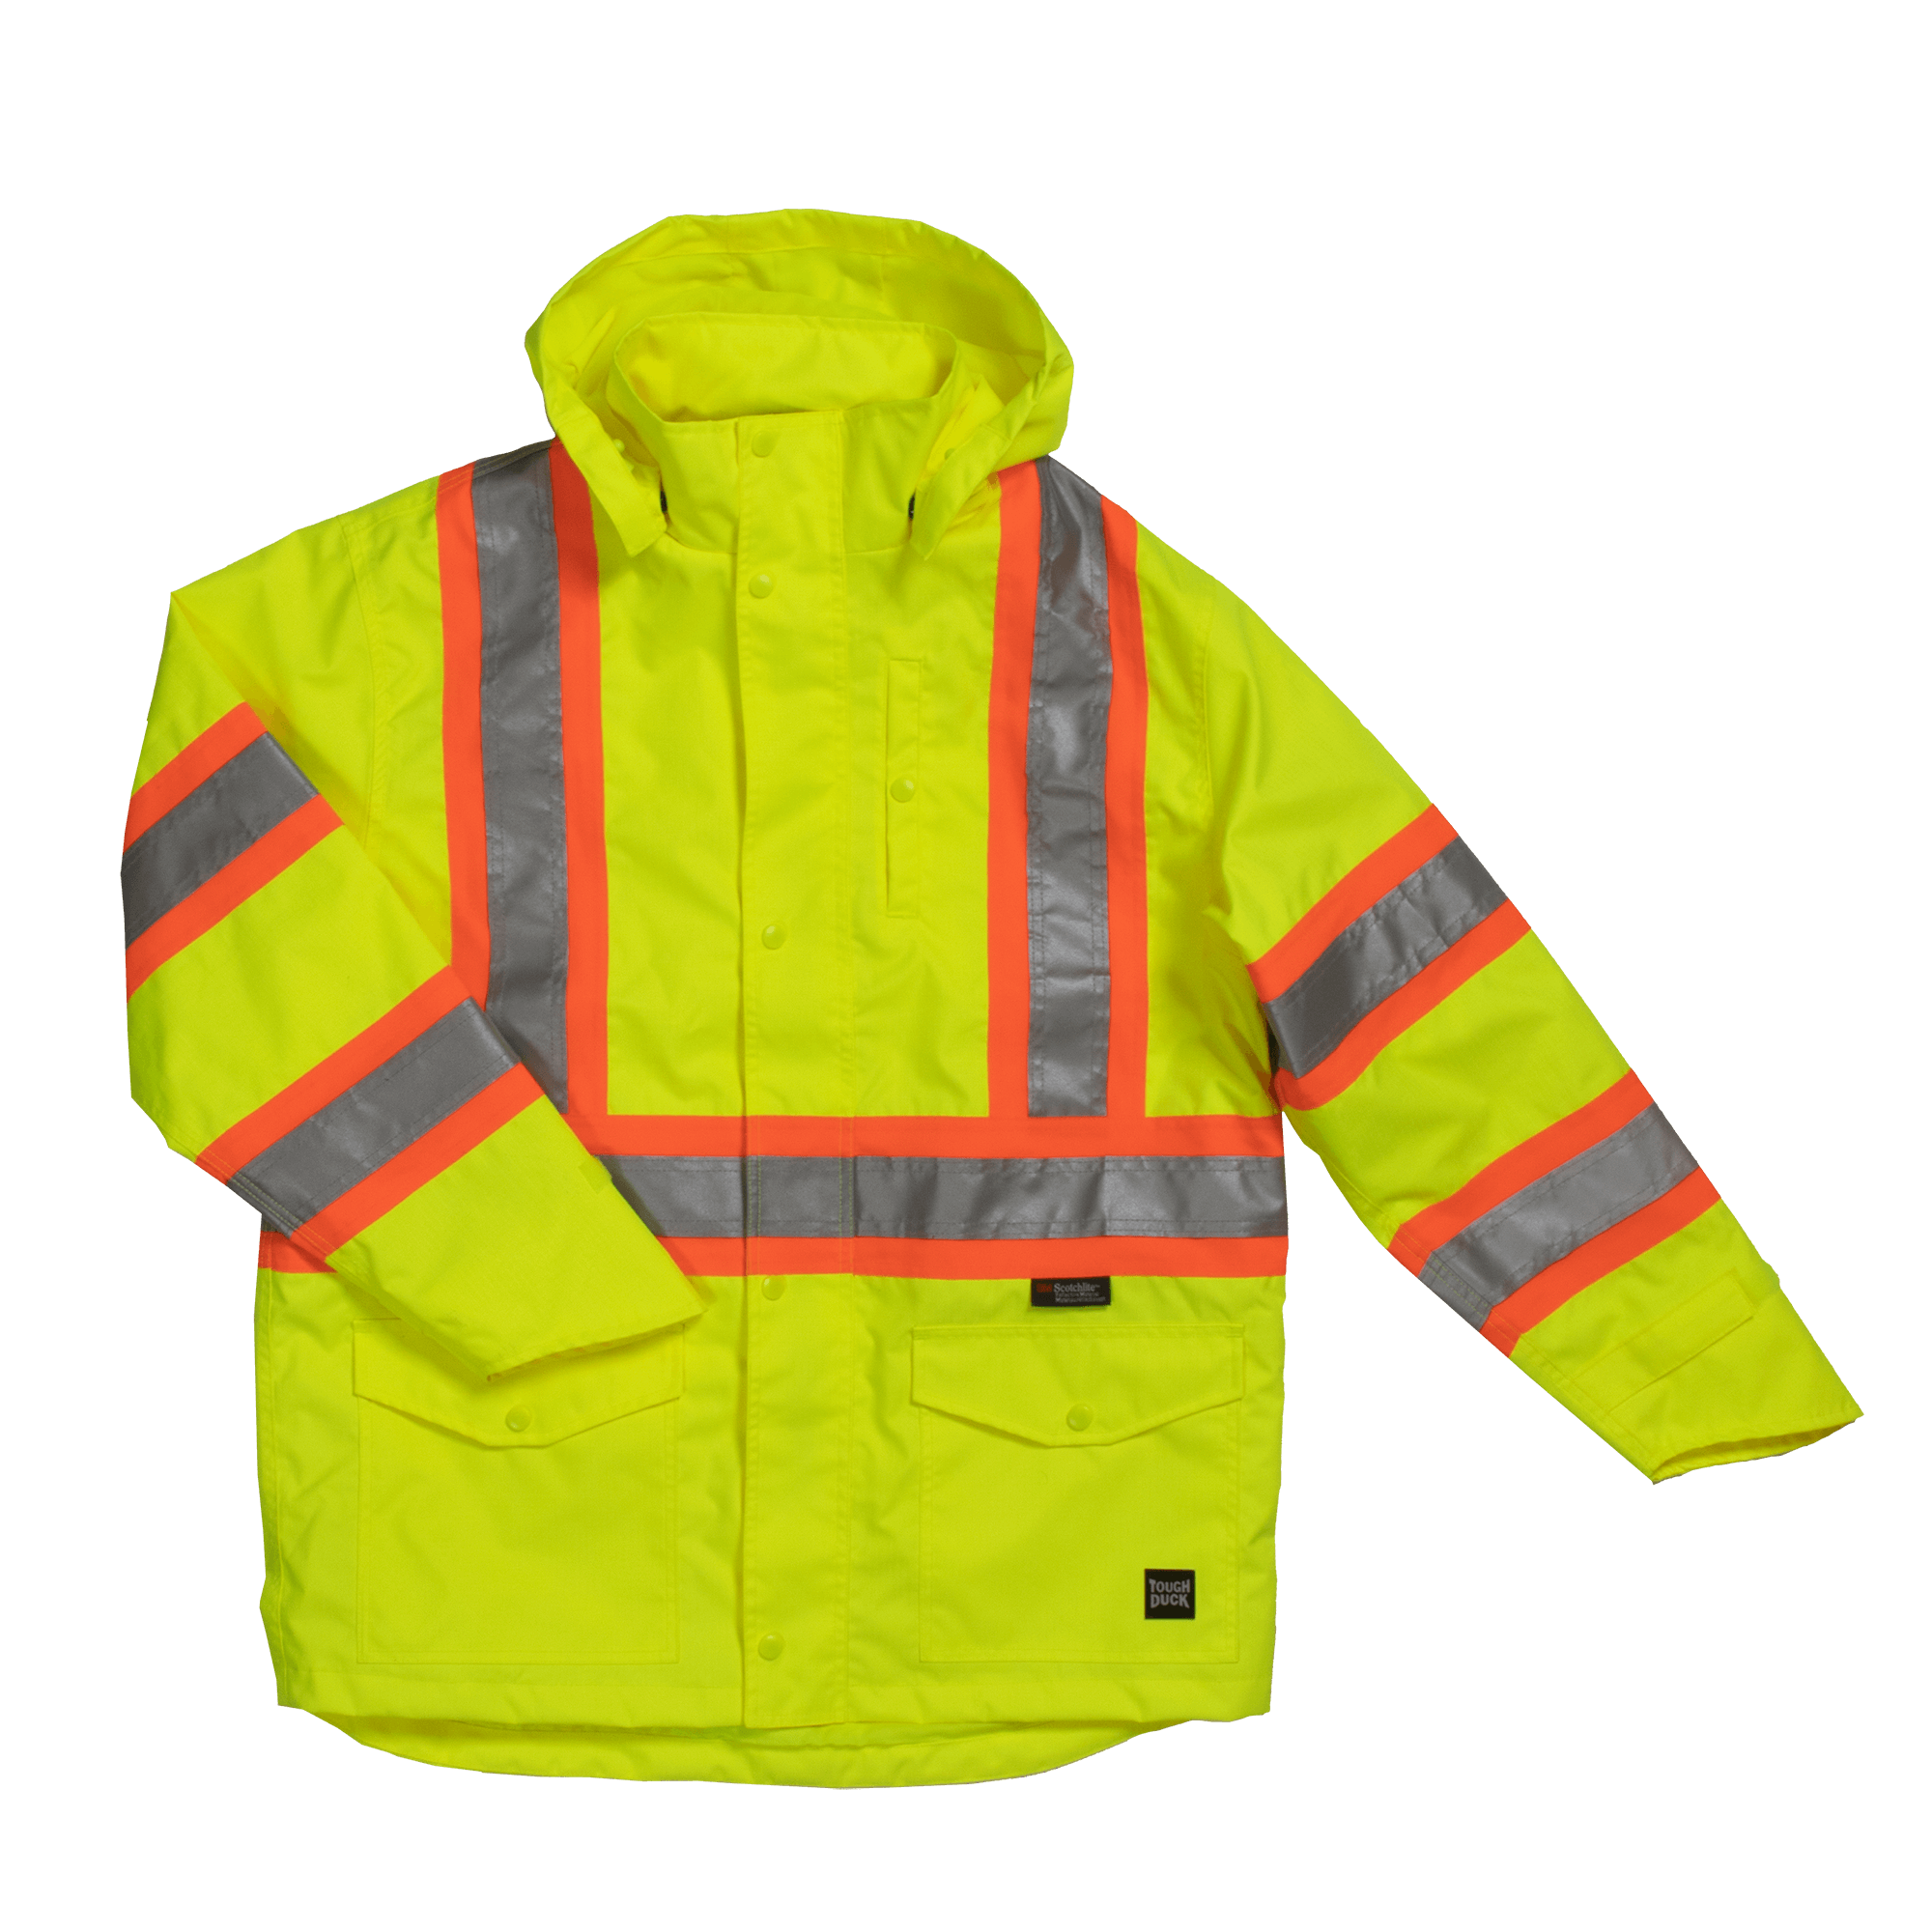 Tough Duck C3 Hi-Vis Waterproof Snap-Front Safety Rain Jacket - Work World - Workwear, Work Boots, Safety Gear